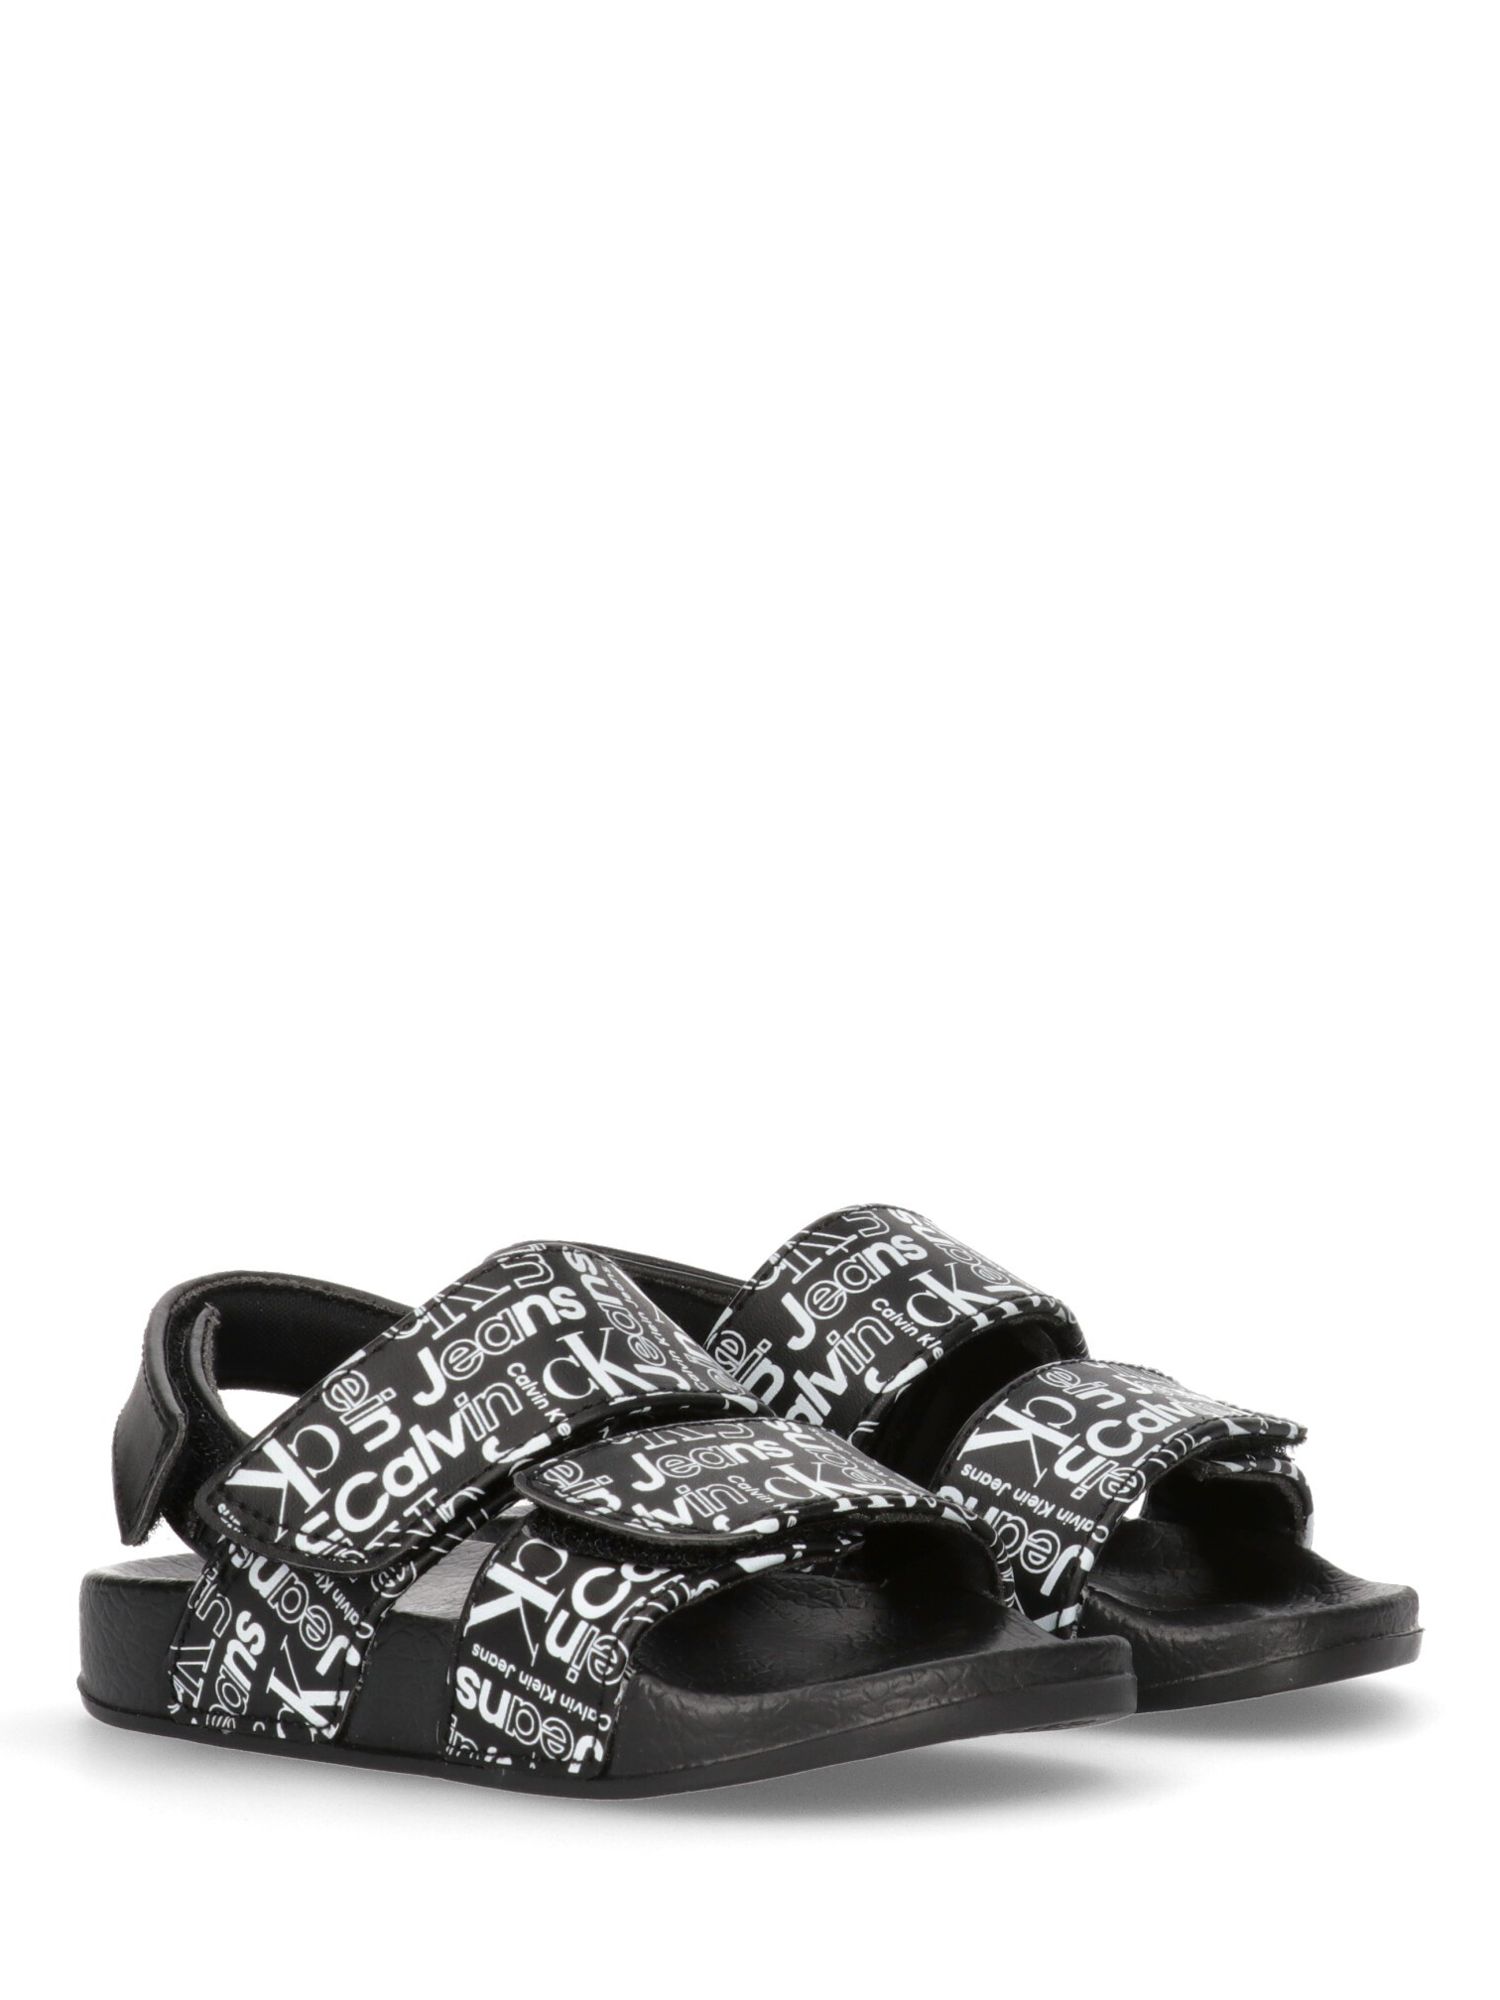 Calvin Klein Kids' Logo Riptape Strap Sandals, Black, 22